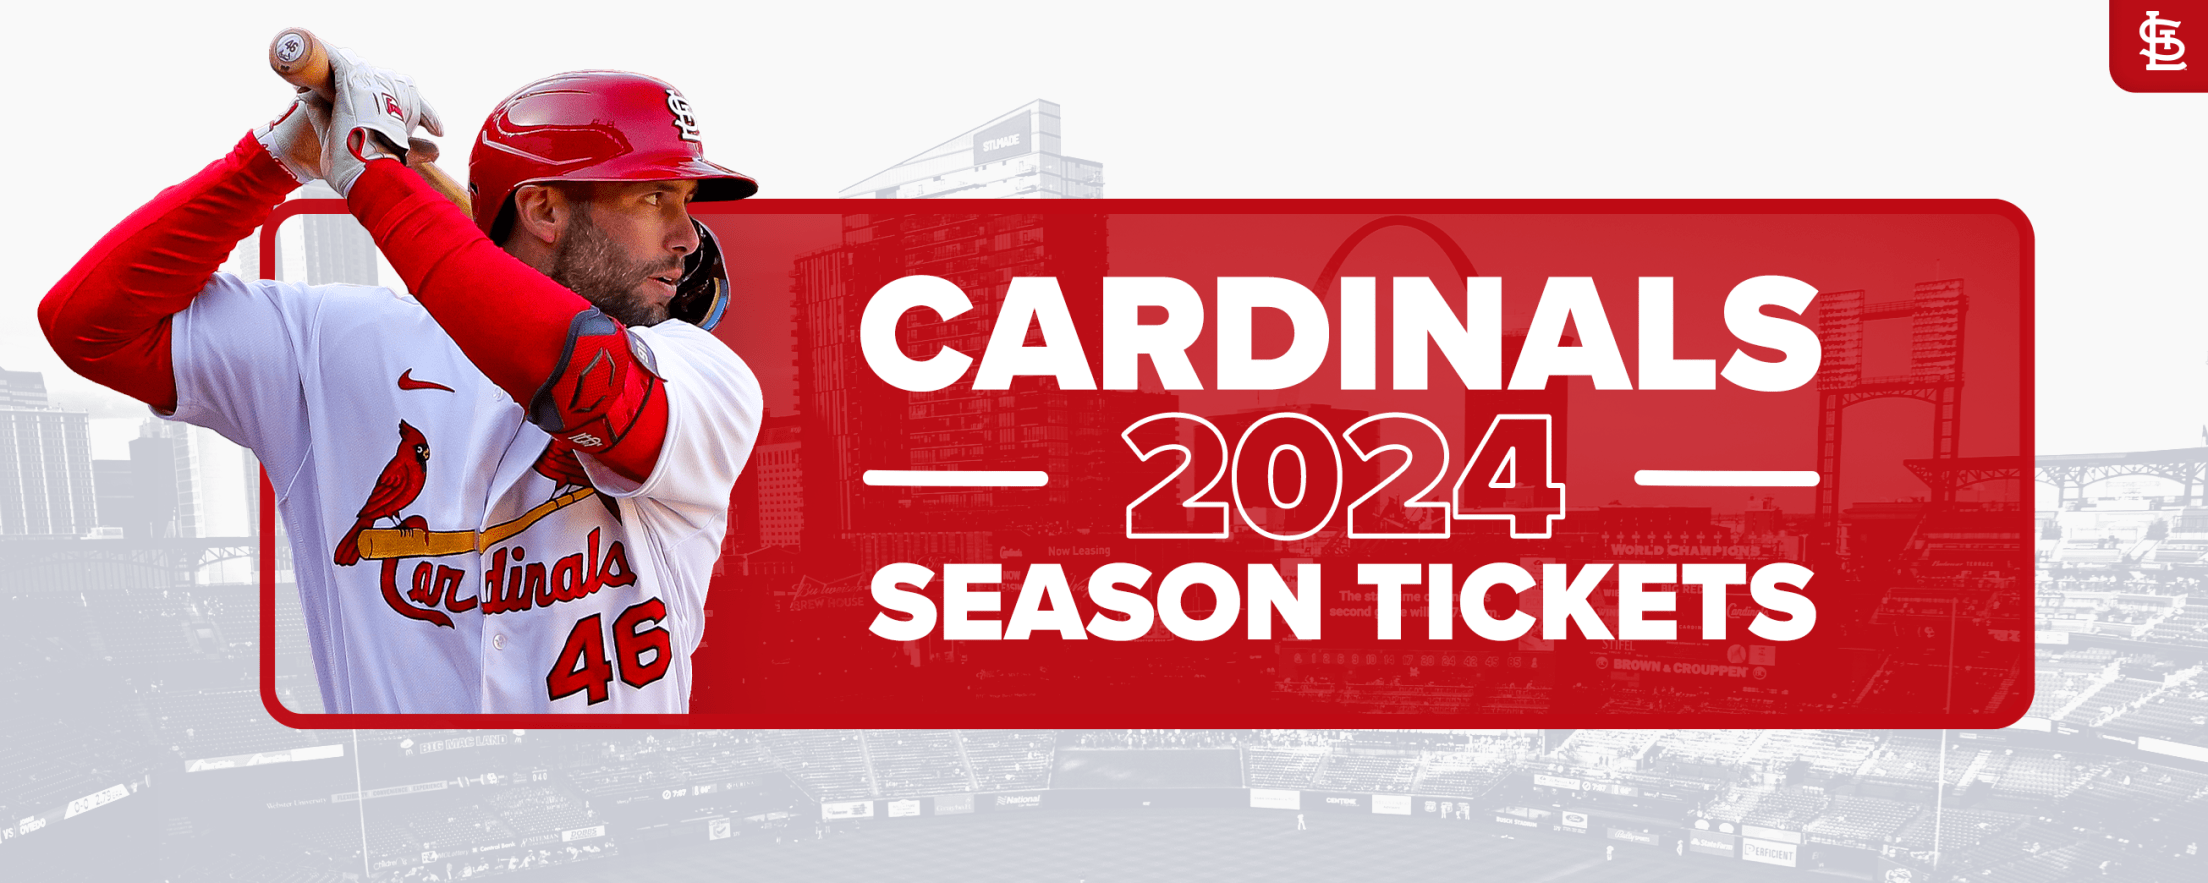 arizona cardinals season tickets price